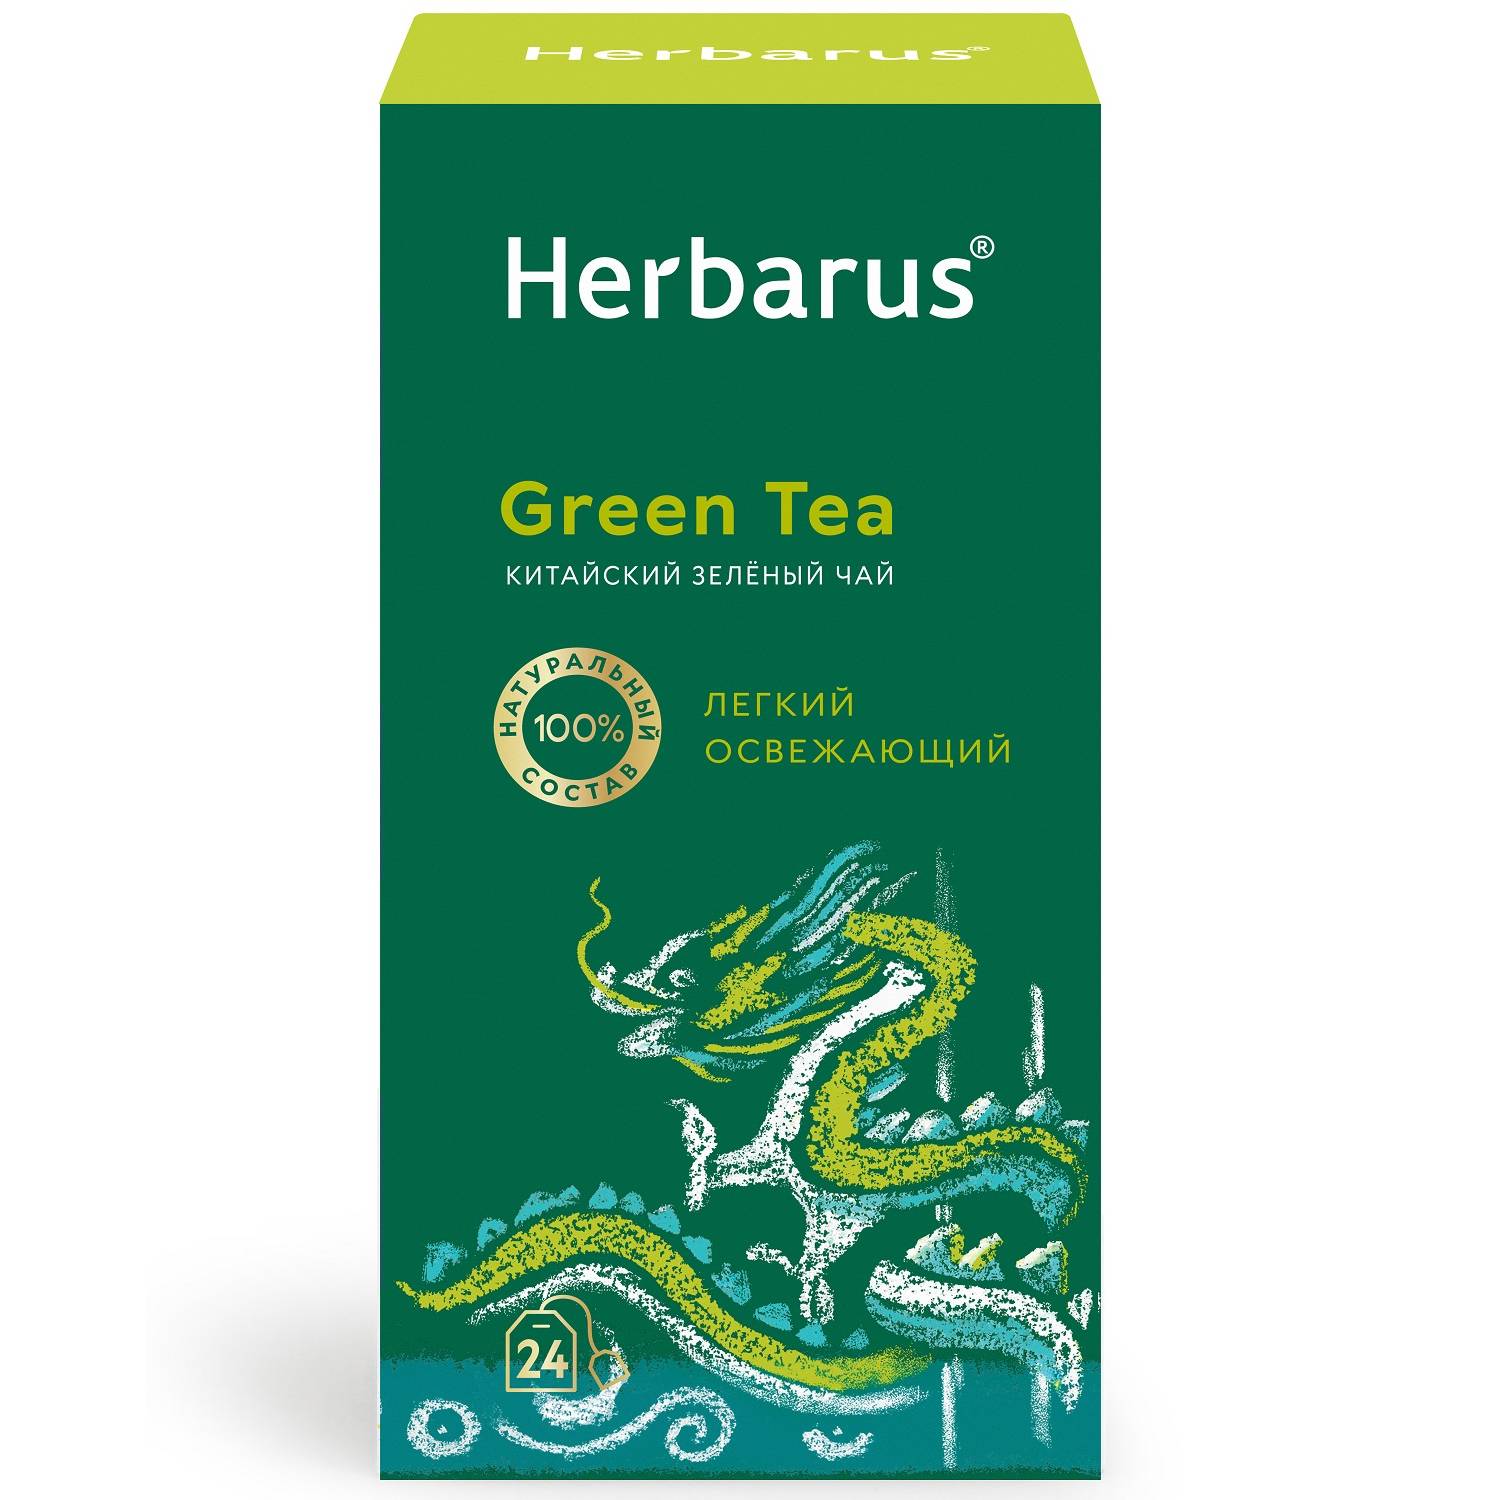 Herbarus Чай зеленый китайский Green Tea, 24 пакетика х 2 г (Herbarus, Классический чай) чай травяной herbarus спелый ароматный 24 пакетиков